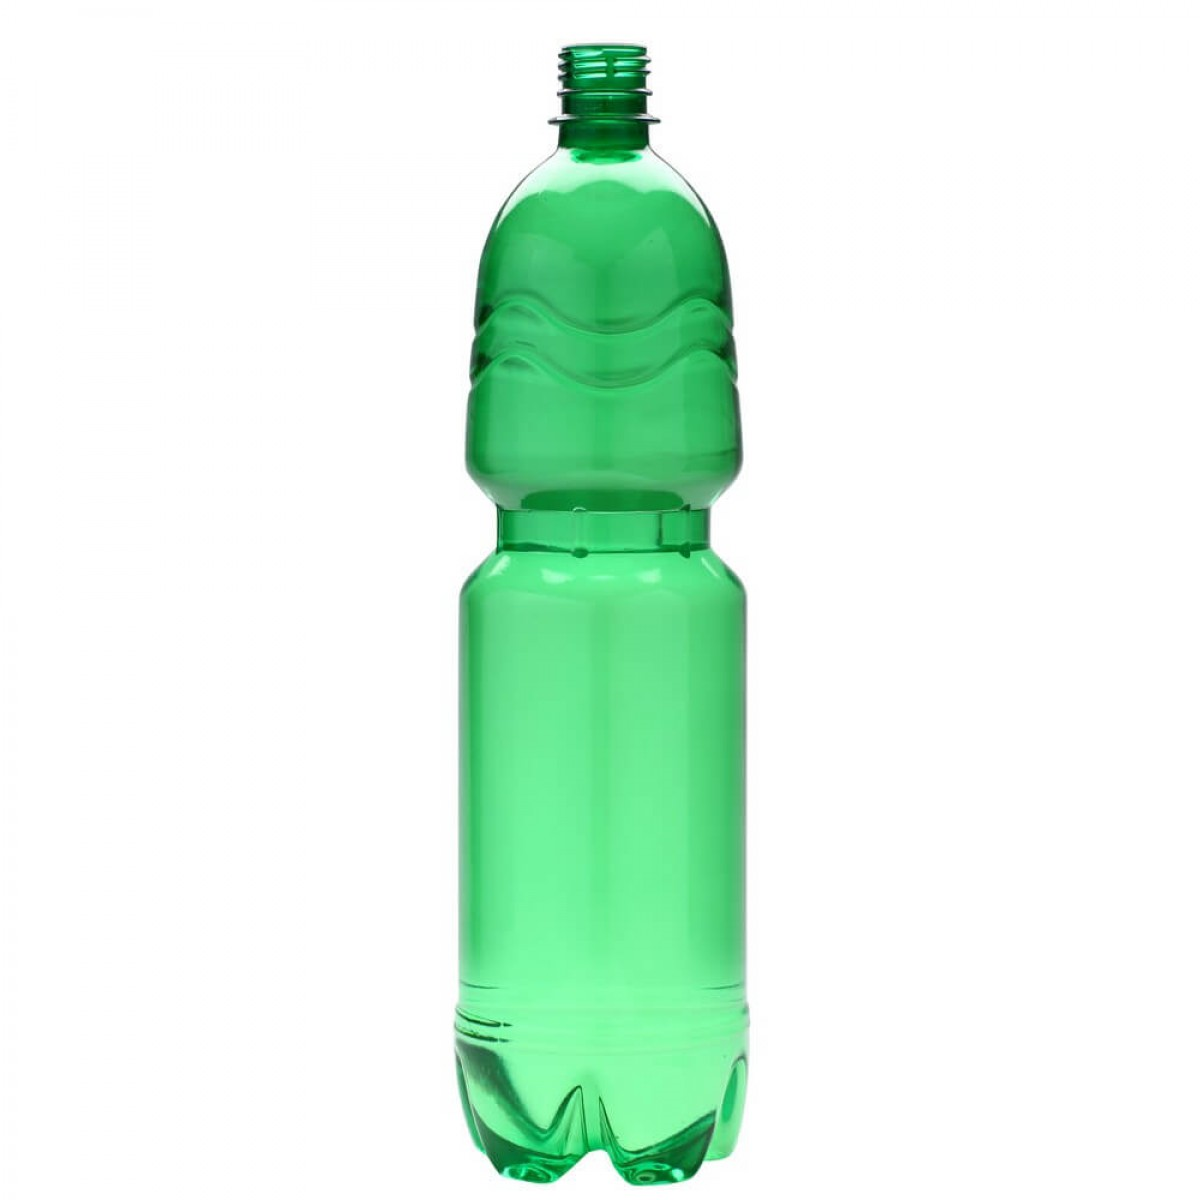 Перформа 1.5 бутылка ПЭТ. Зеленая пластиковая бутылка. ПЭТ бутылка зеленая. Бутылка 1.5 литра. Бутылки зеленого цвета